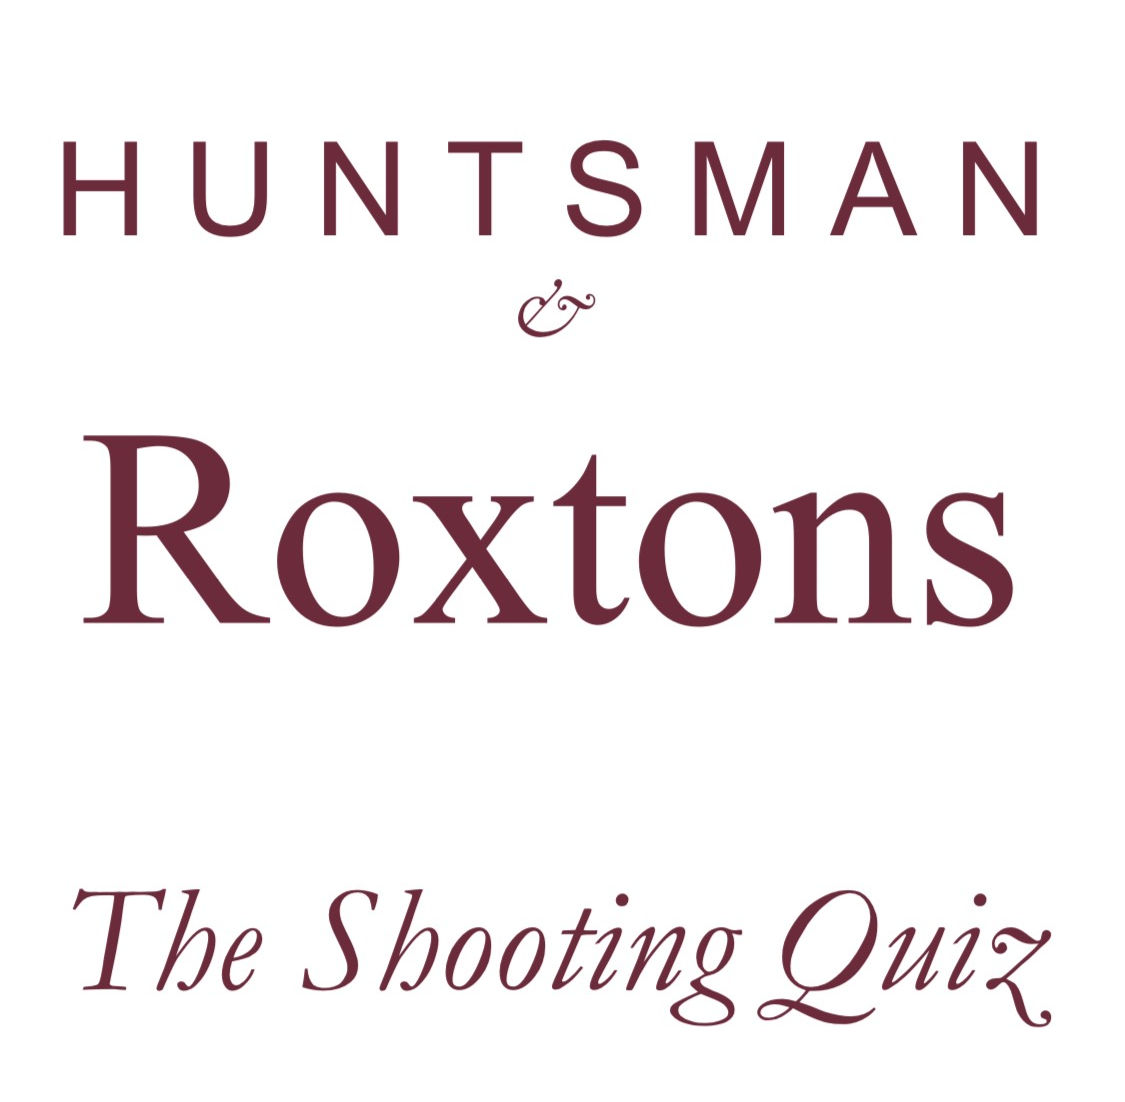 Roxtons & Huntsman Shooting Quiz